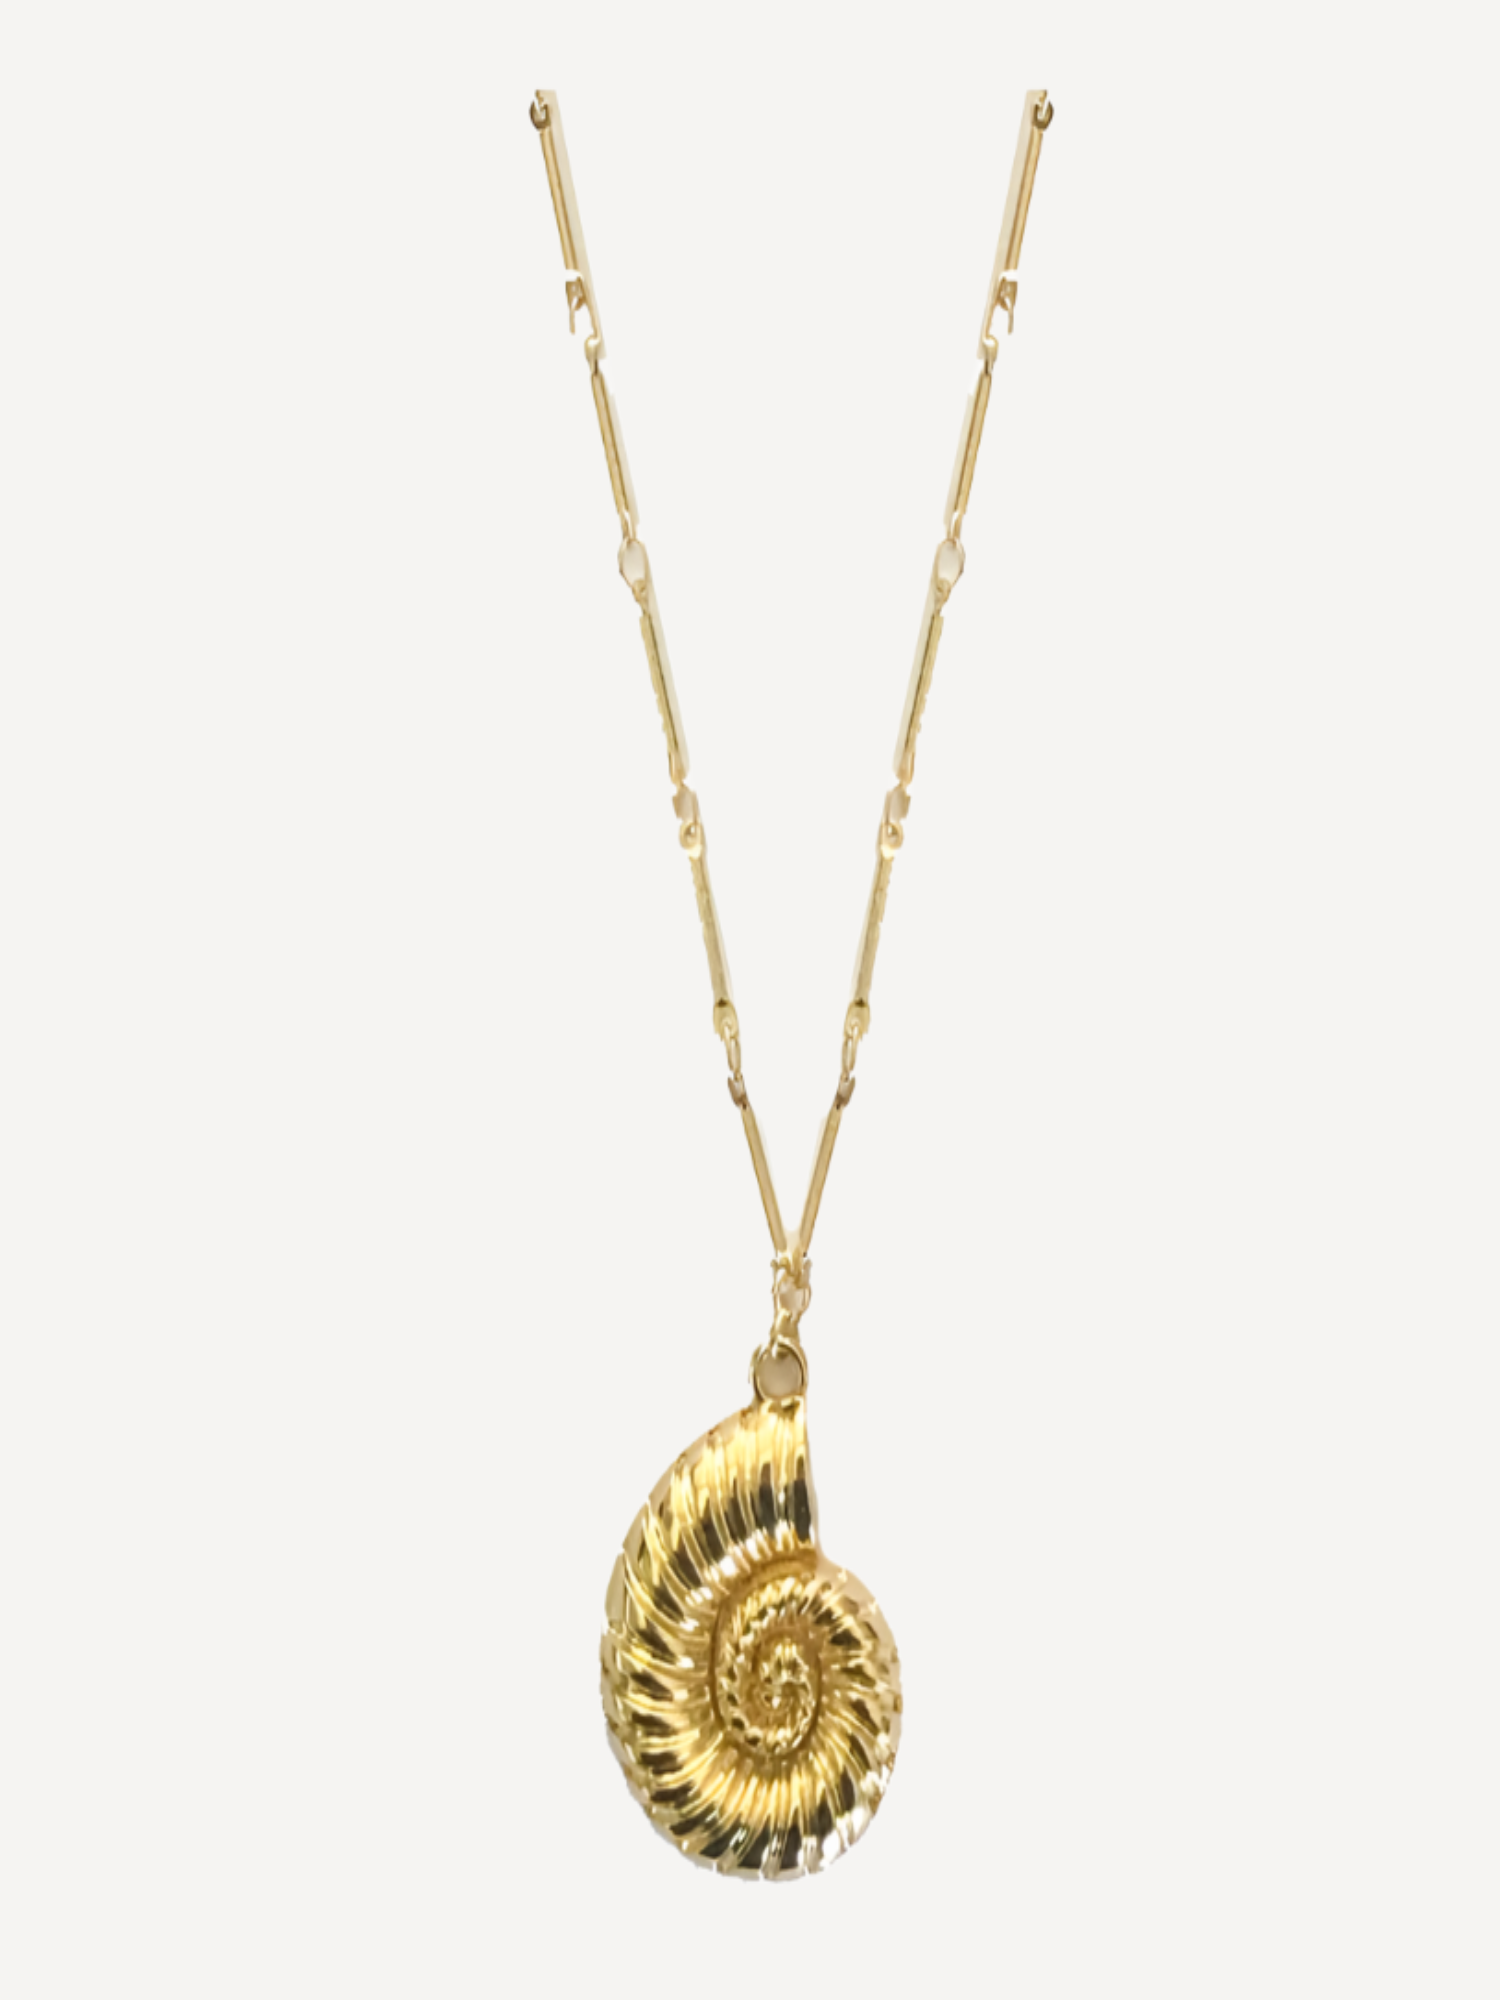 Nautilus Pendant Necklace